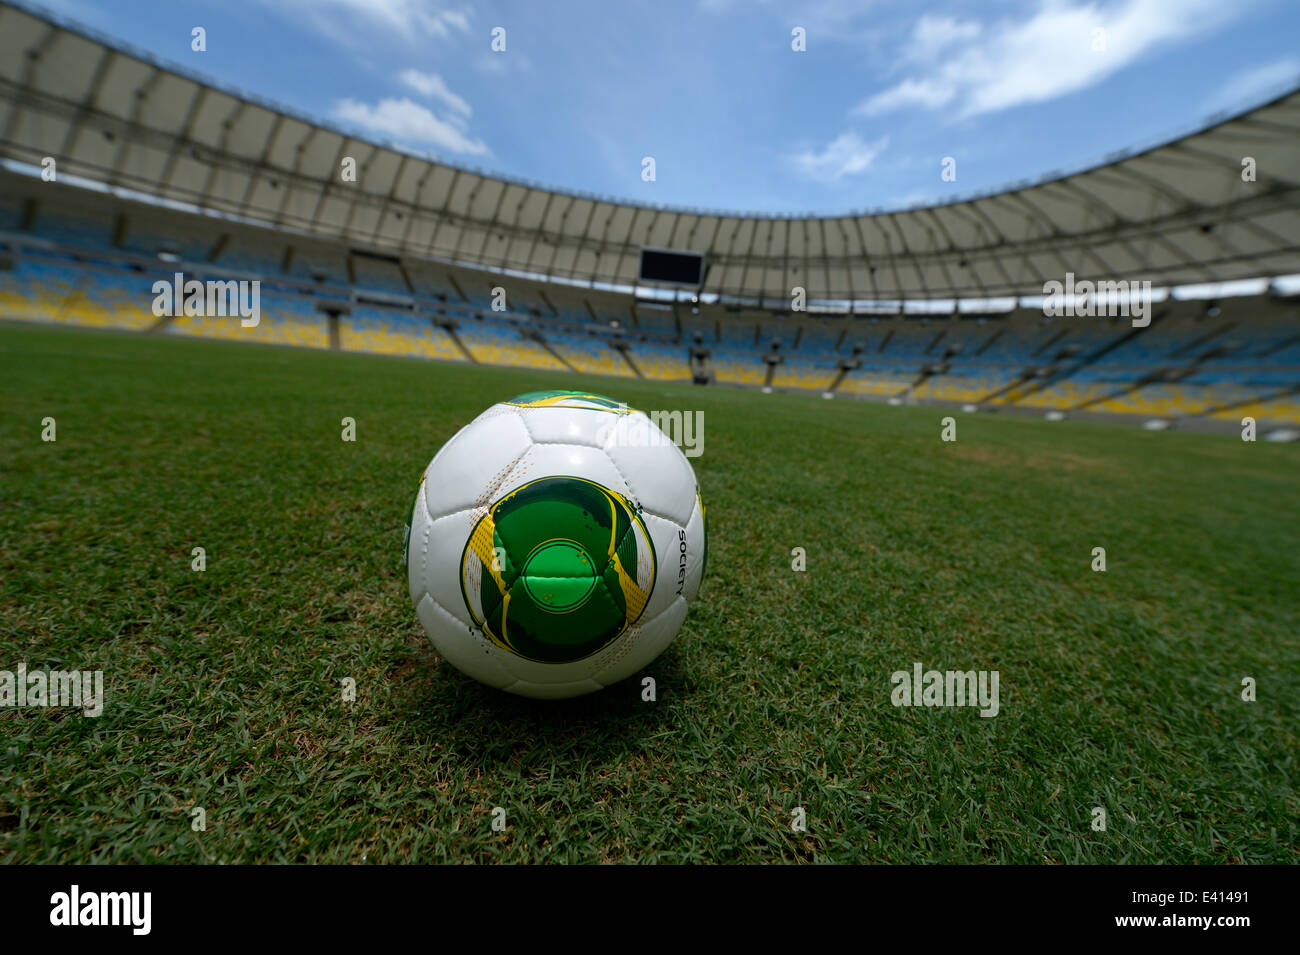 Brazil, Rio de Janeiro, Soccerball on lawn of Maracana Stadium Stock Photo